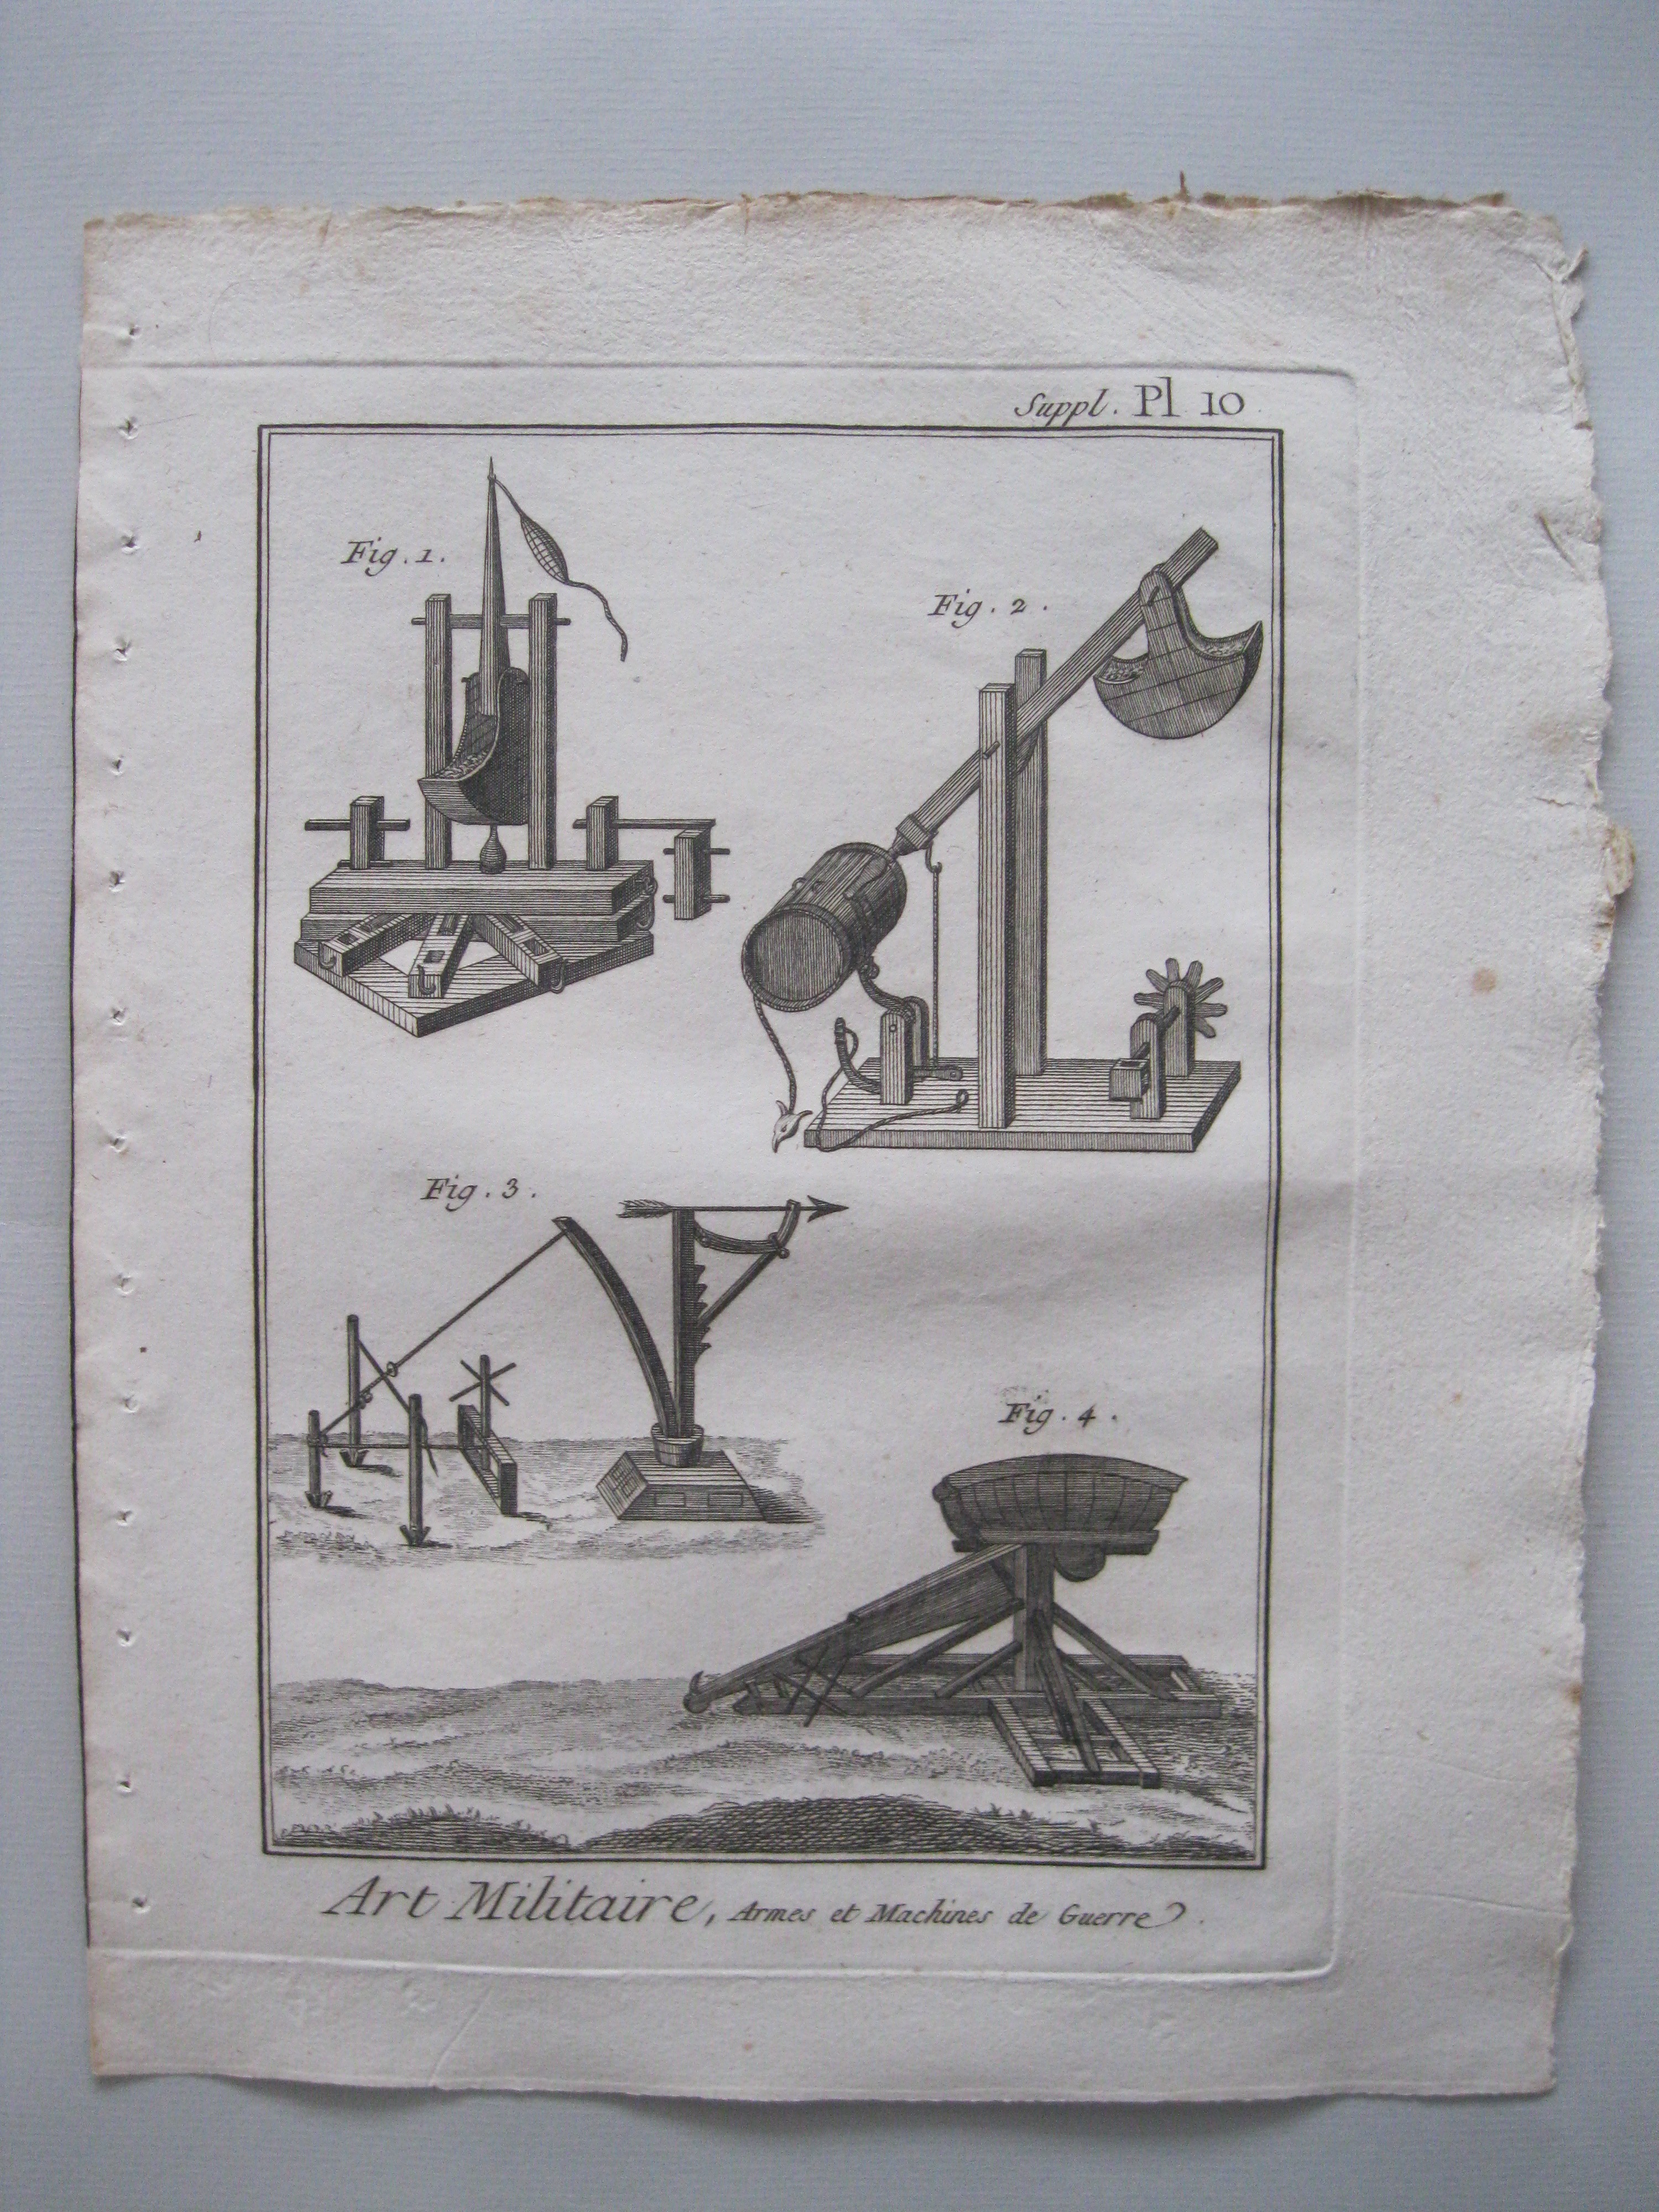 Arte militar XII.Armas y máquinas de guerra.Diderot et D'Alembert, 1779